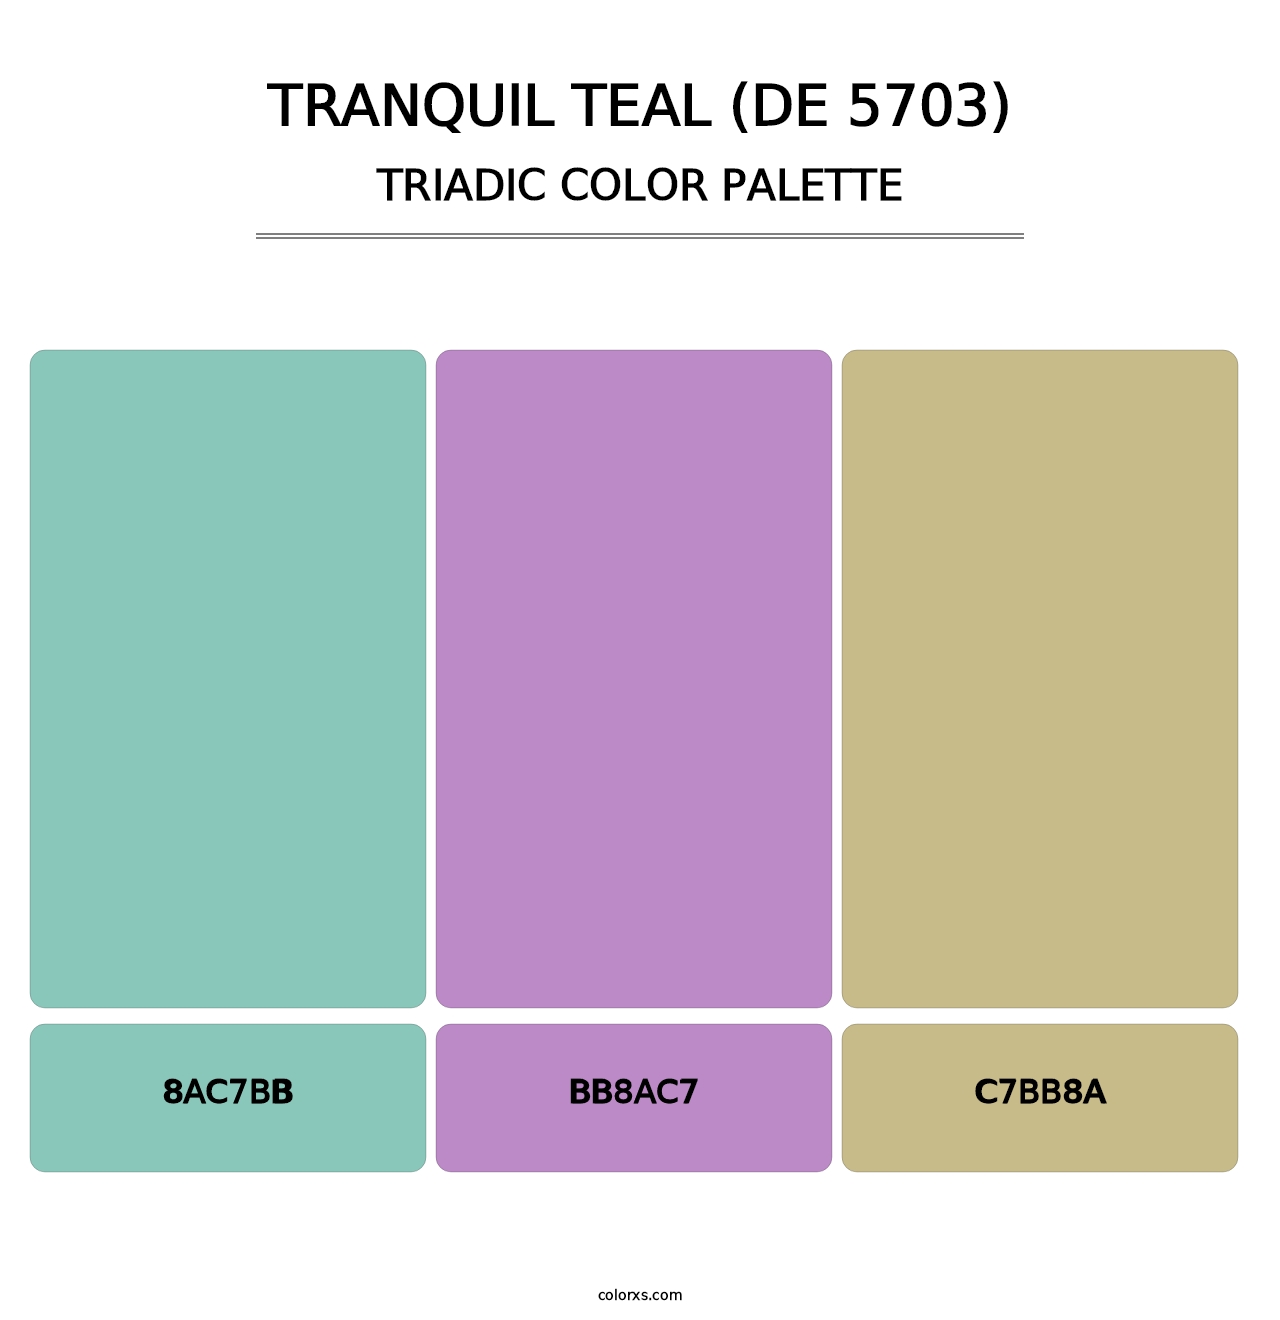 Tranquil Teal (DE 5703) - Triadic Color Palette